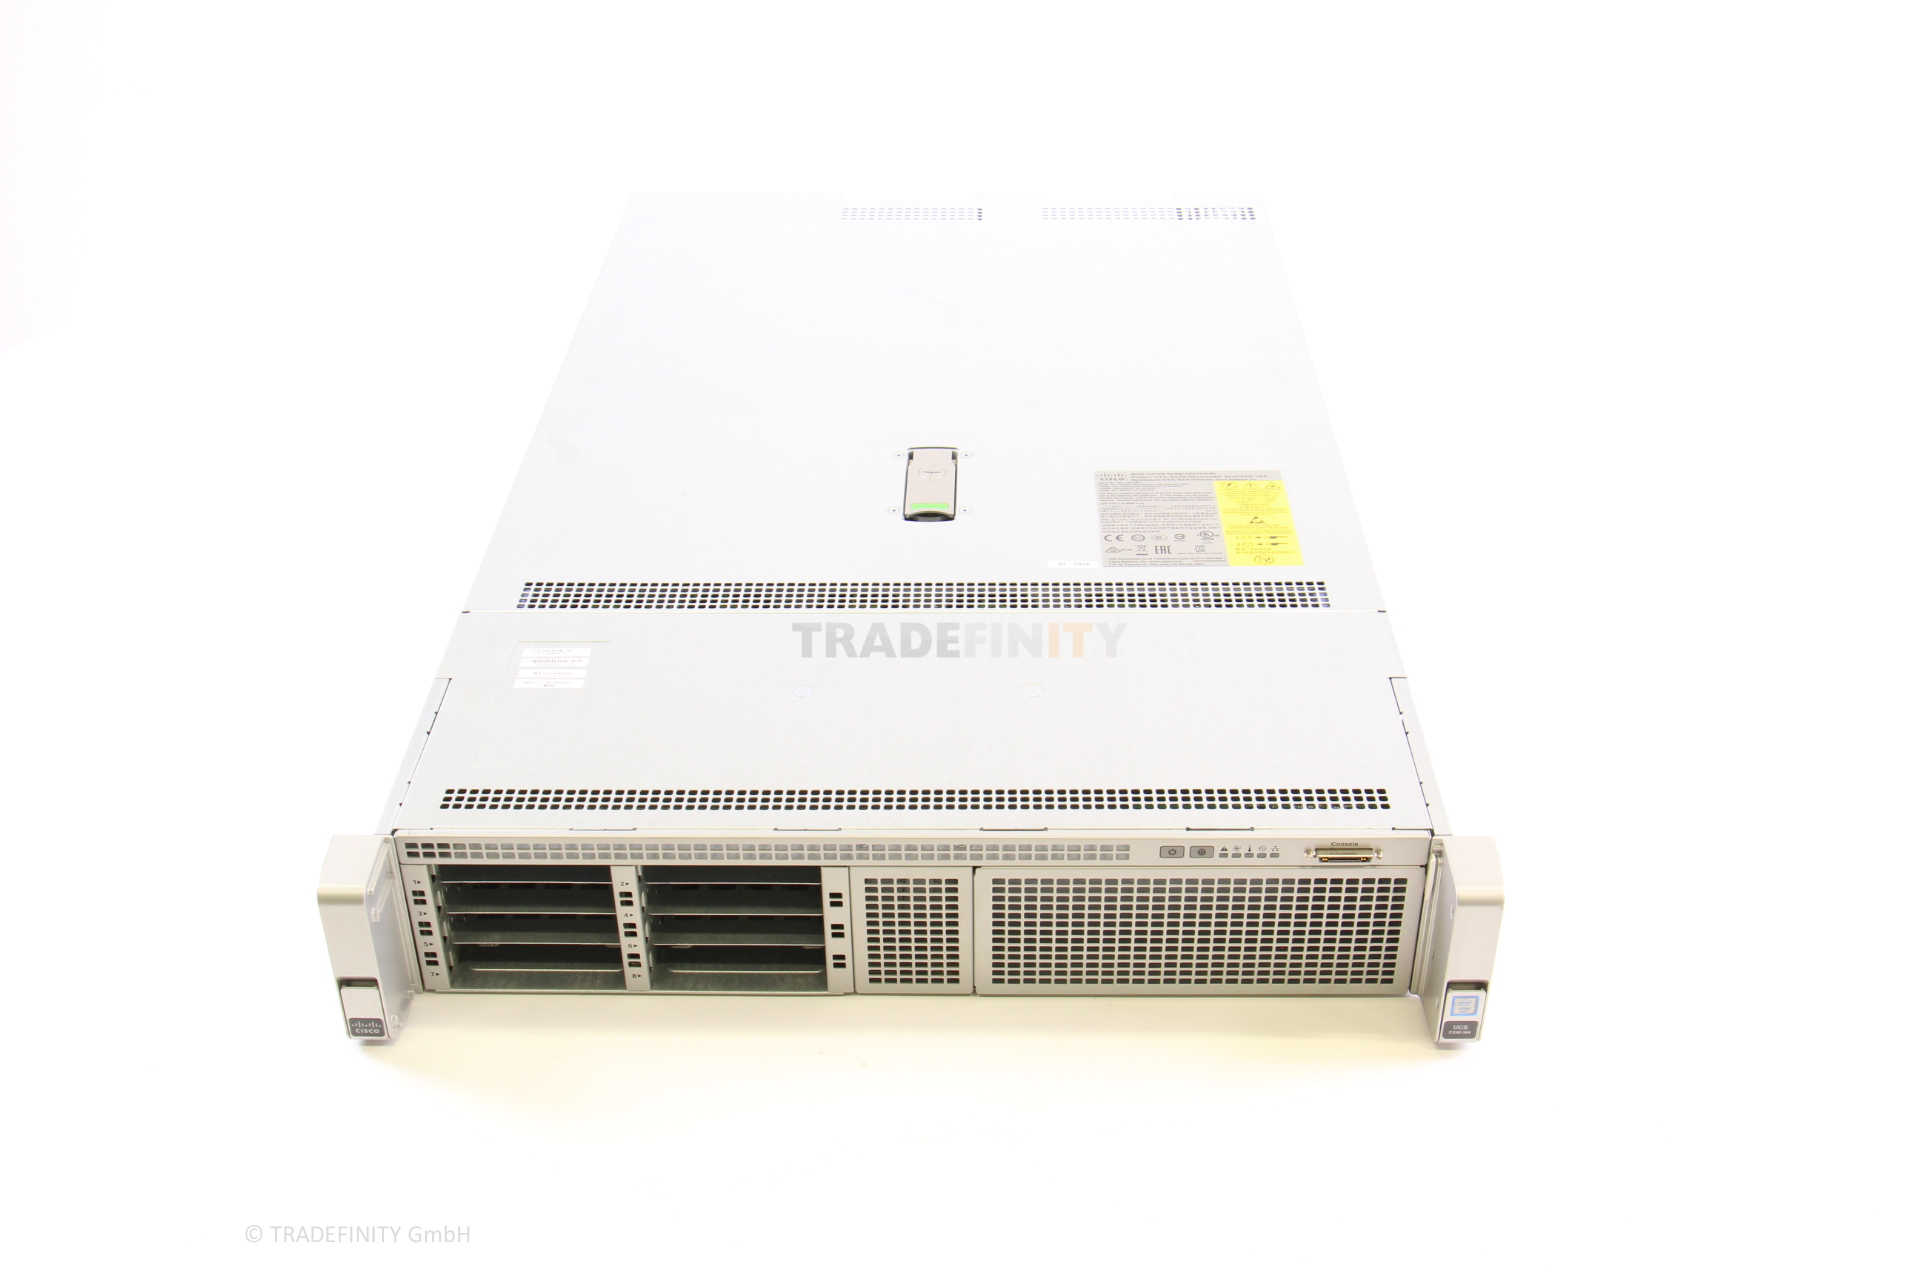 UCS C240 M4 Rack Server